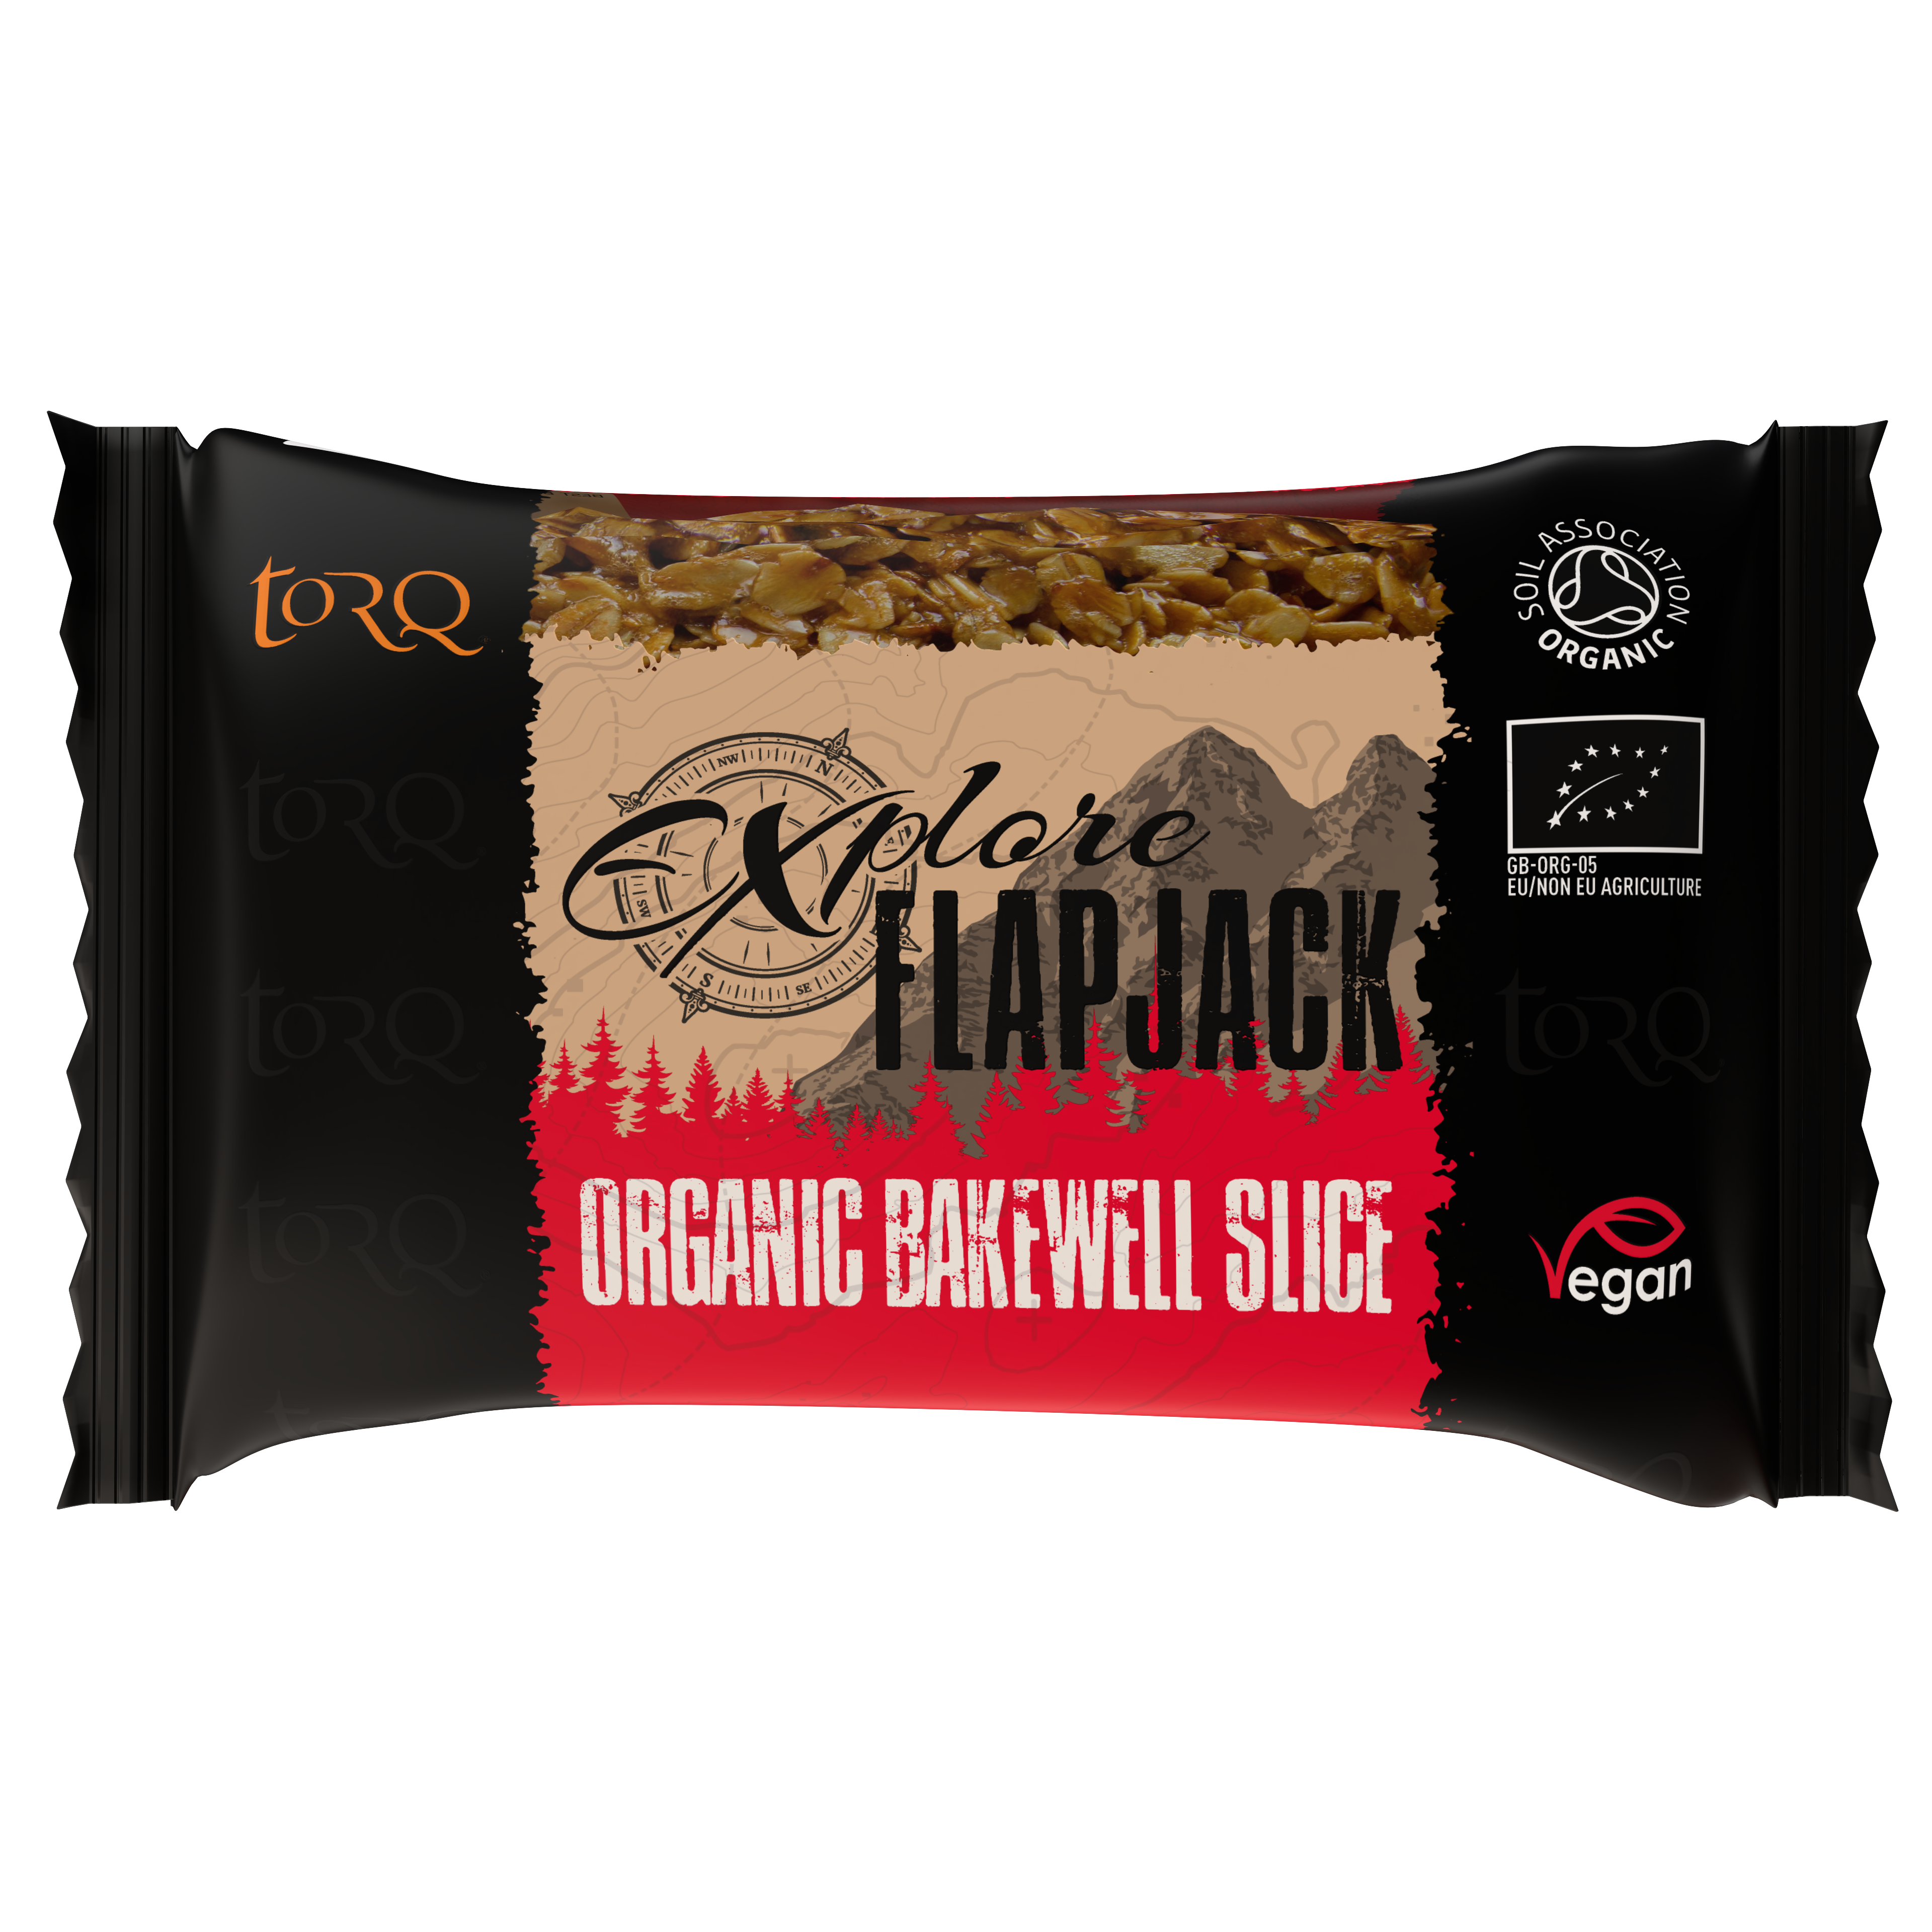 Torq Explore Flapjack - Organic Bakewell Slice